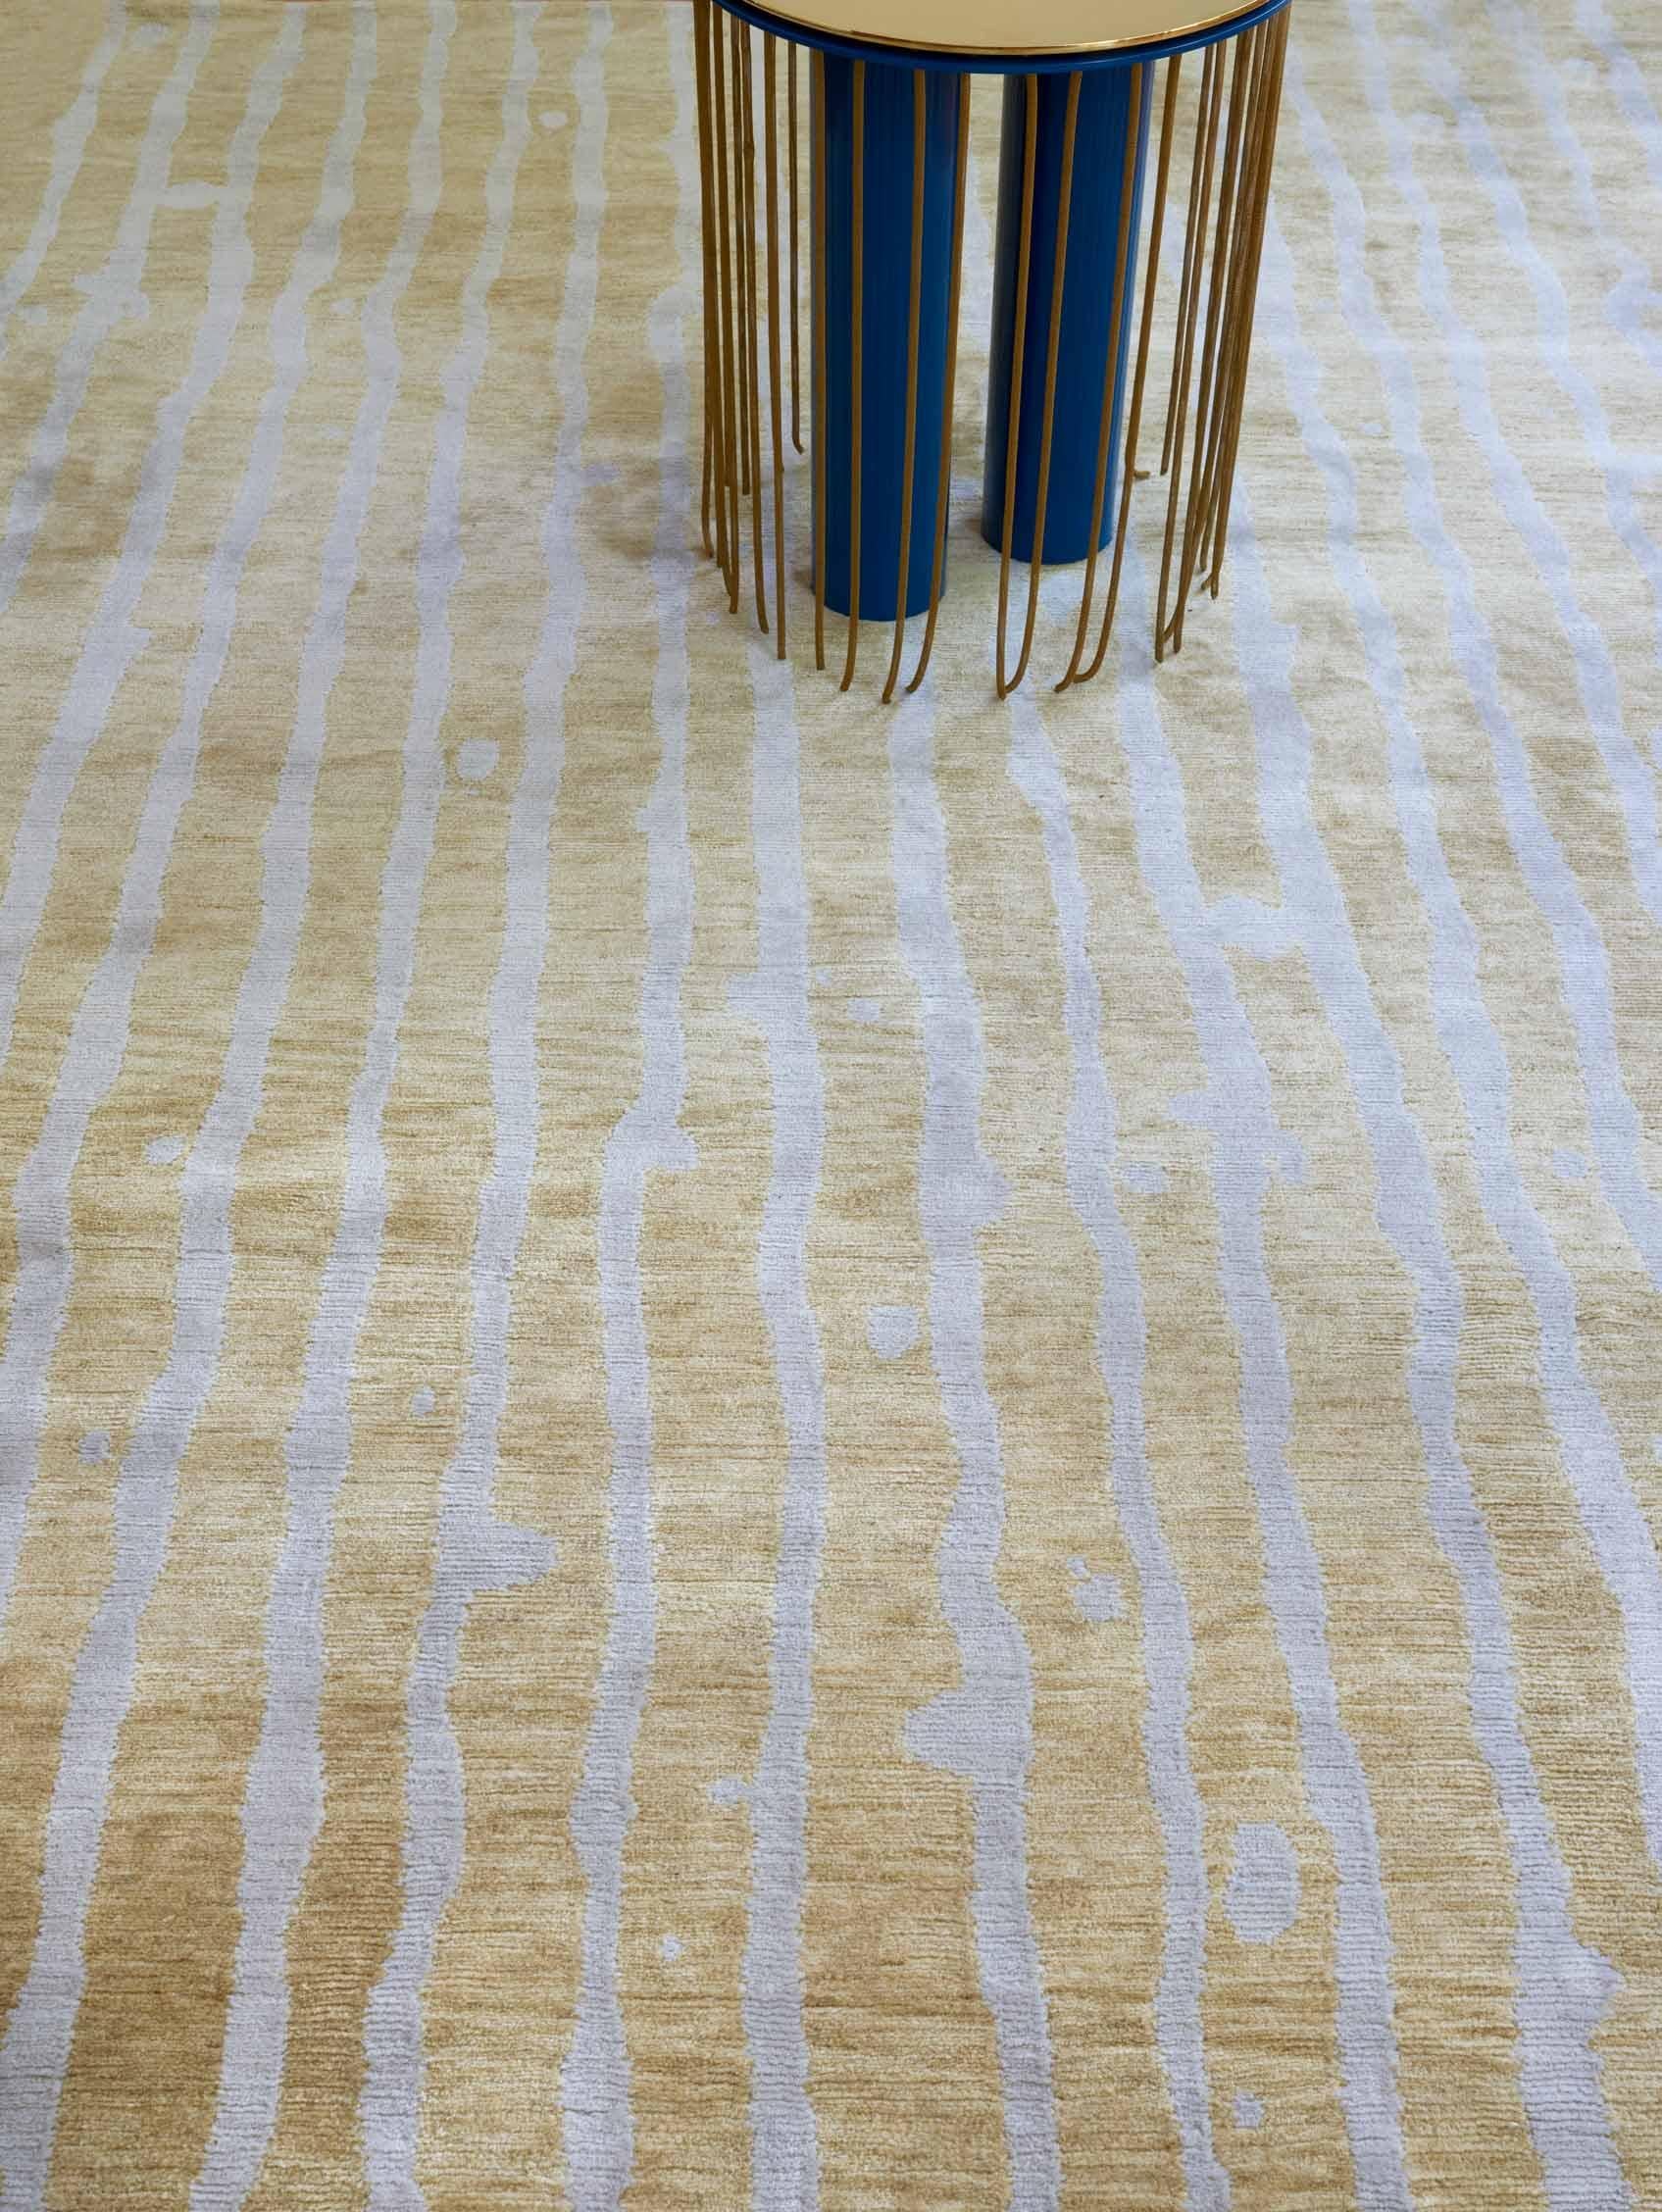 Rug pattern: Drippy Stripe - Sage
Material: 100% Merino Wool
Quality: Tibetan Cross Weave, handwoven 
Size: 5’-0